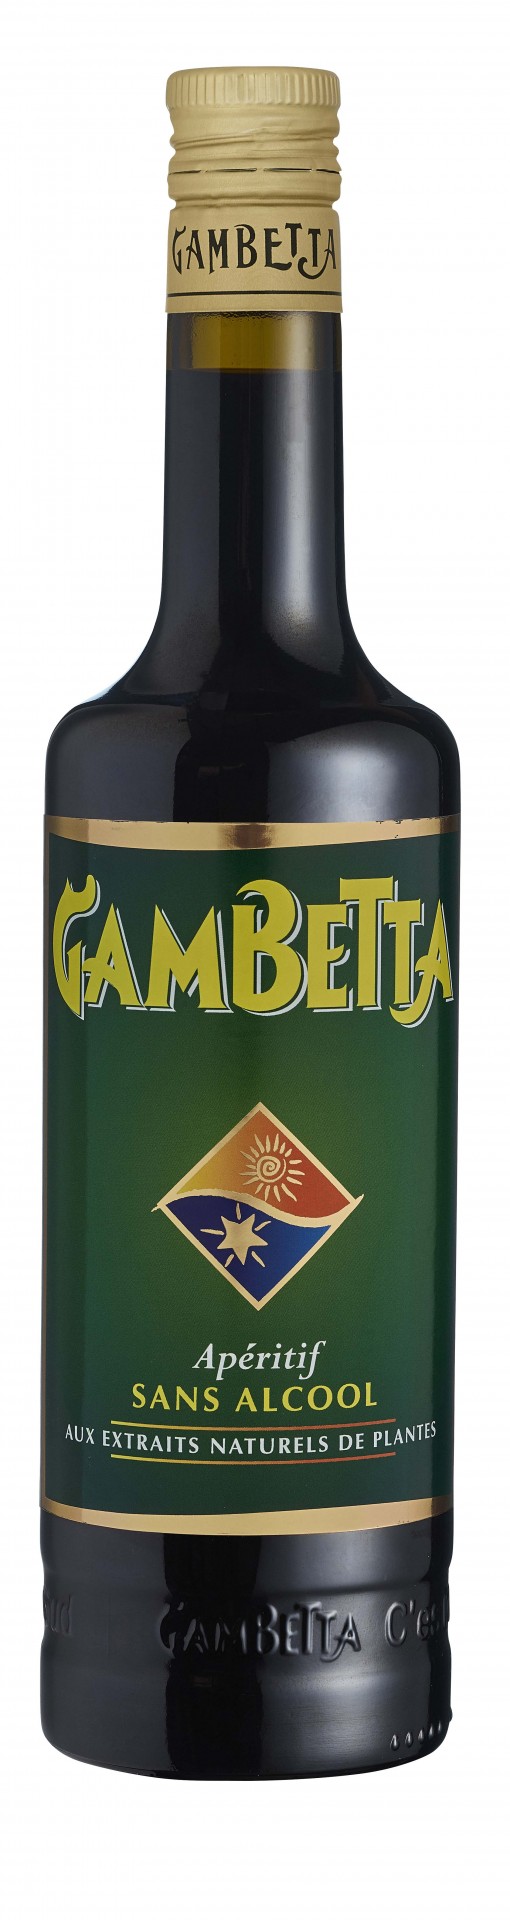 Gambetta Tradition - 75cl